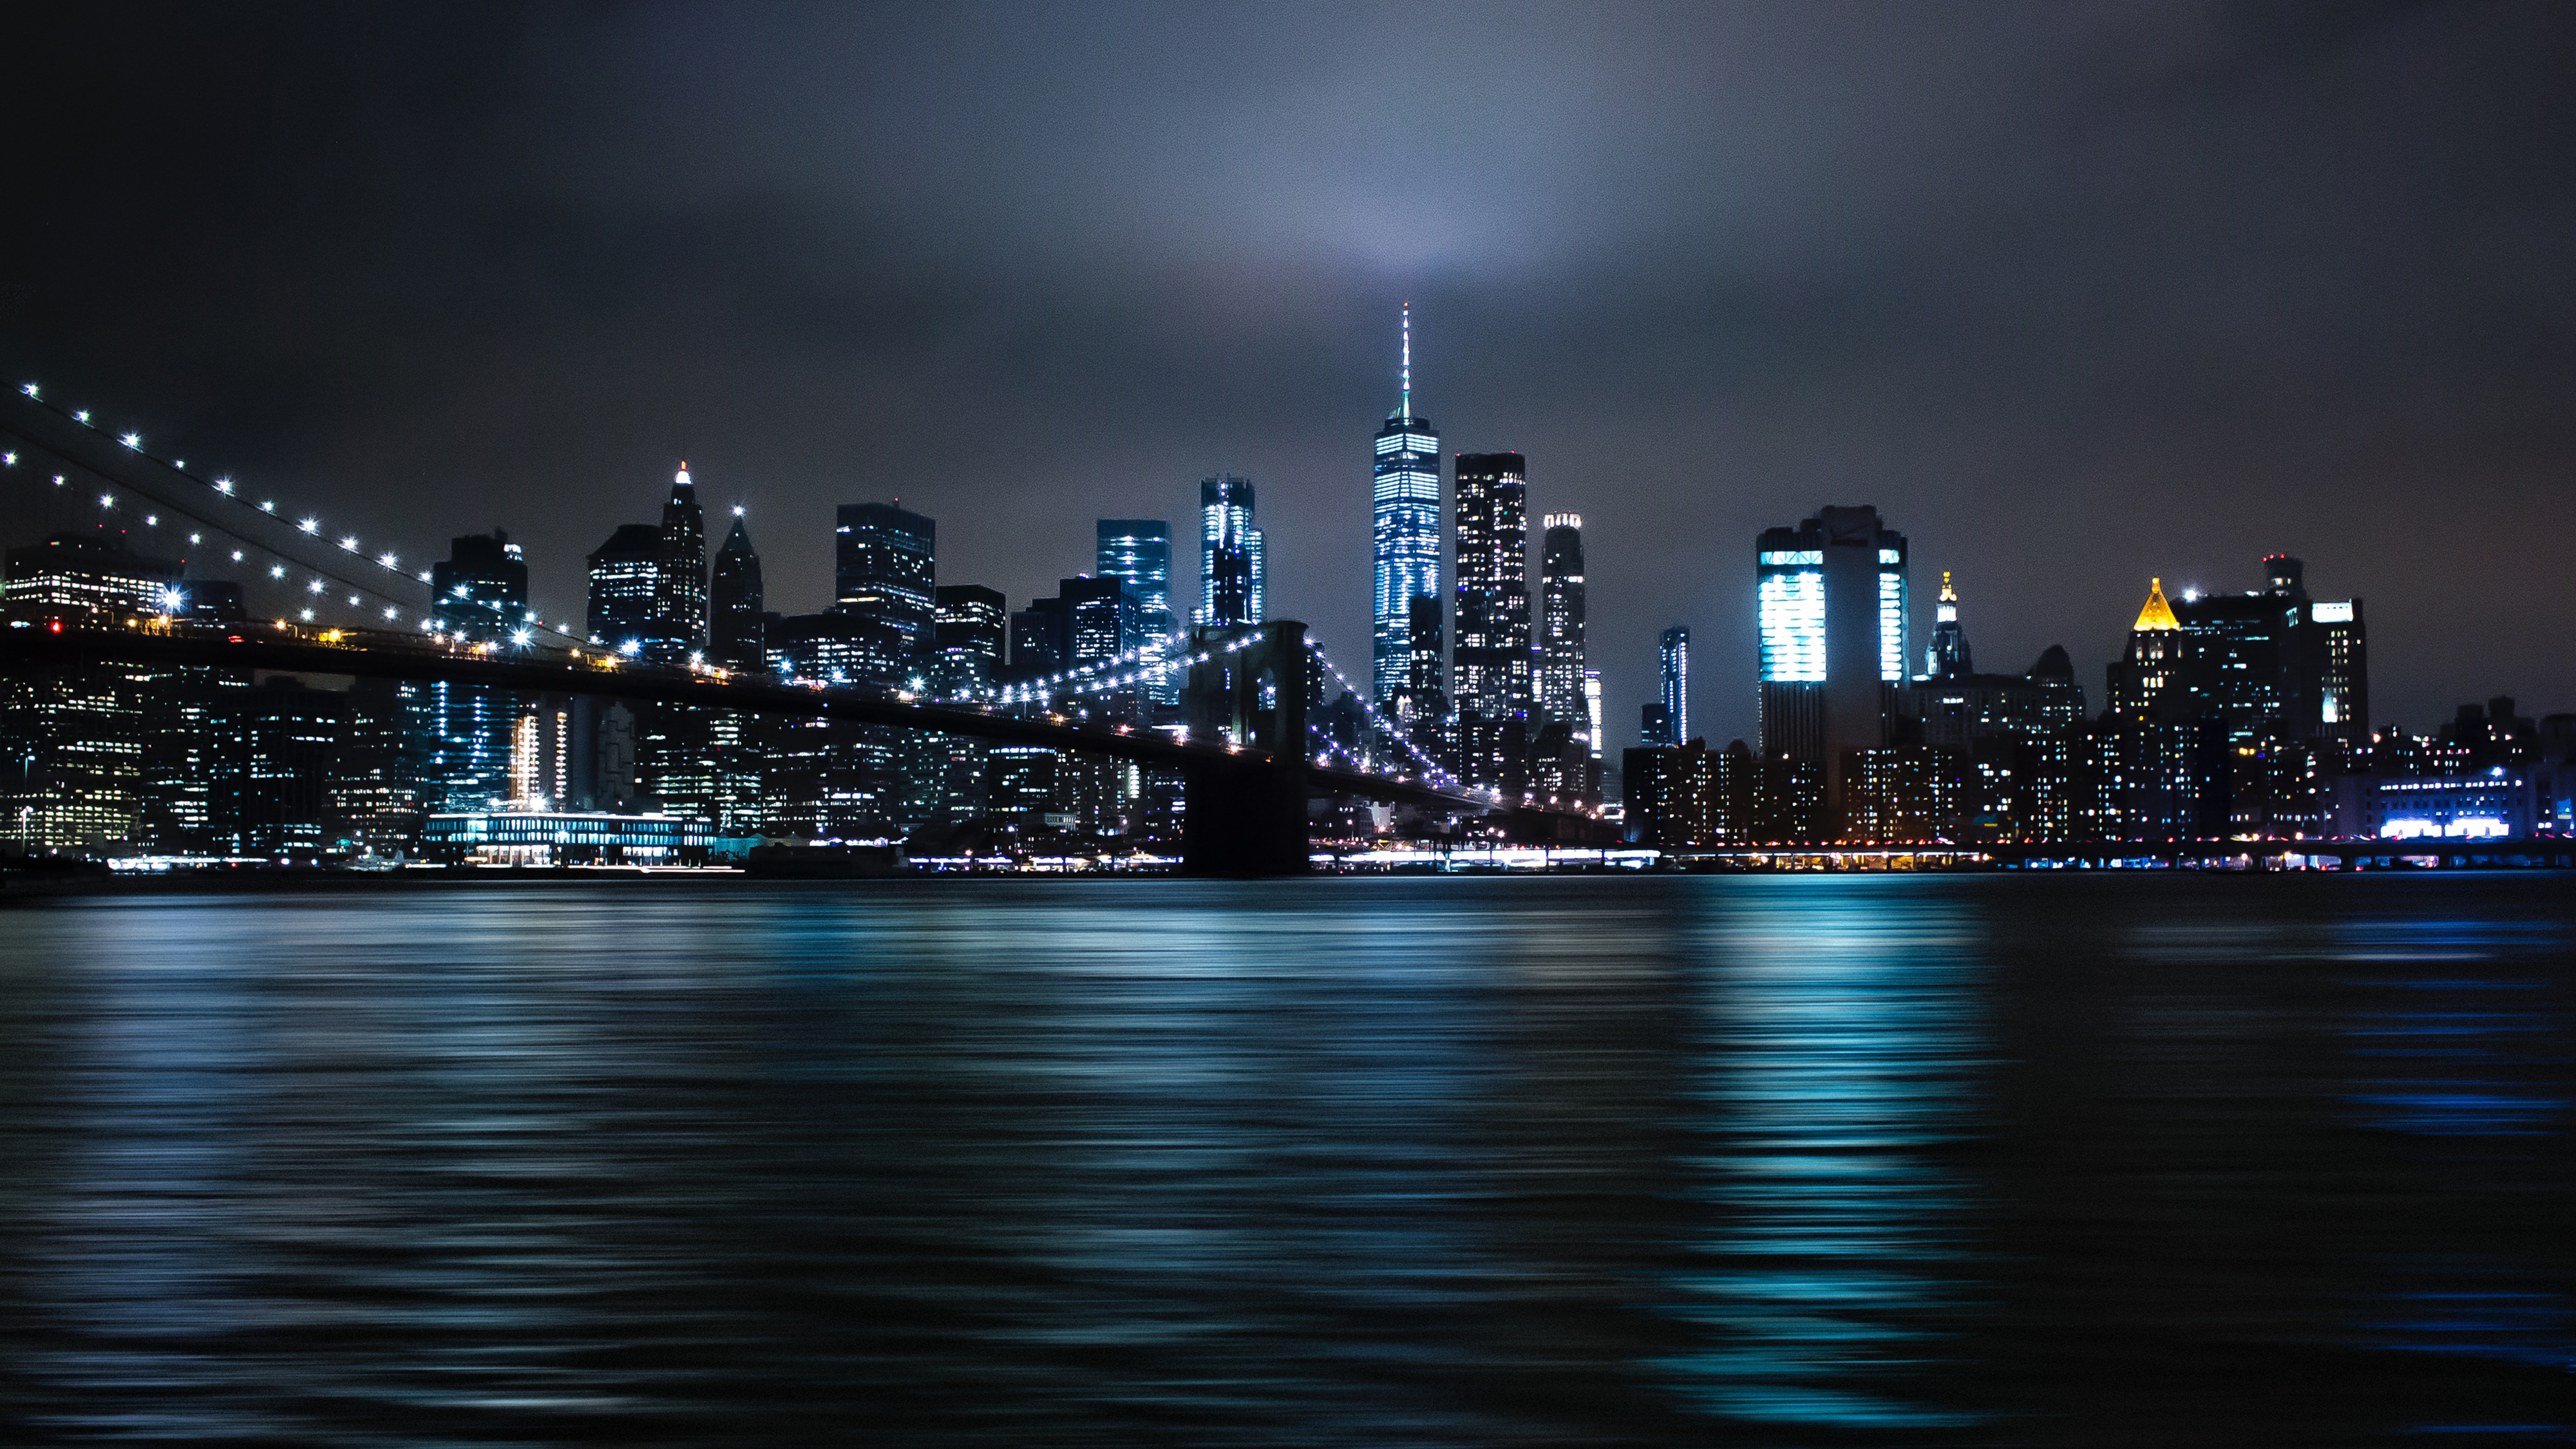 New York City Night Lights, Cityscape by David Skyrius